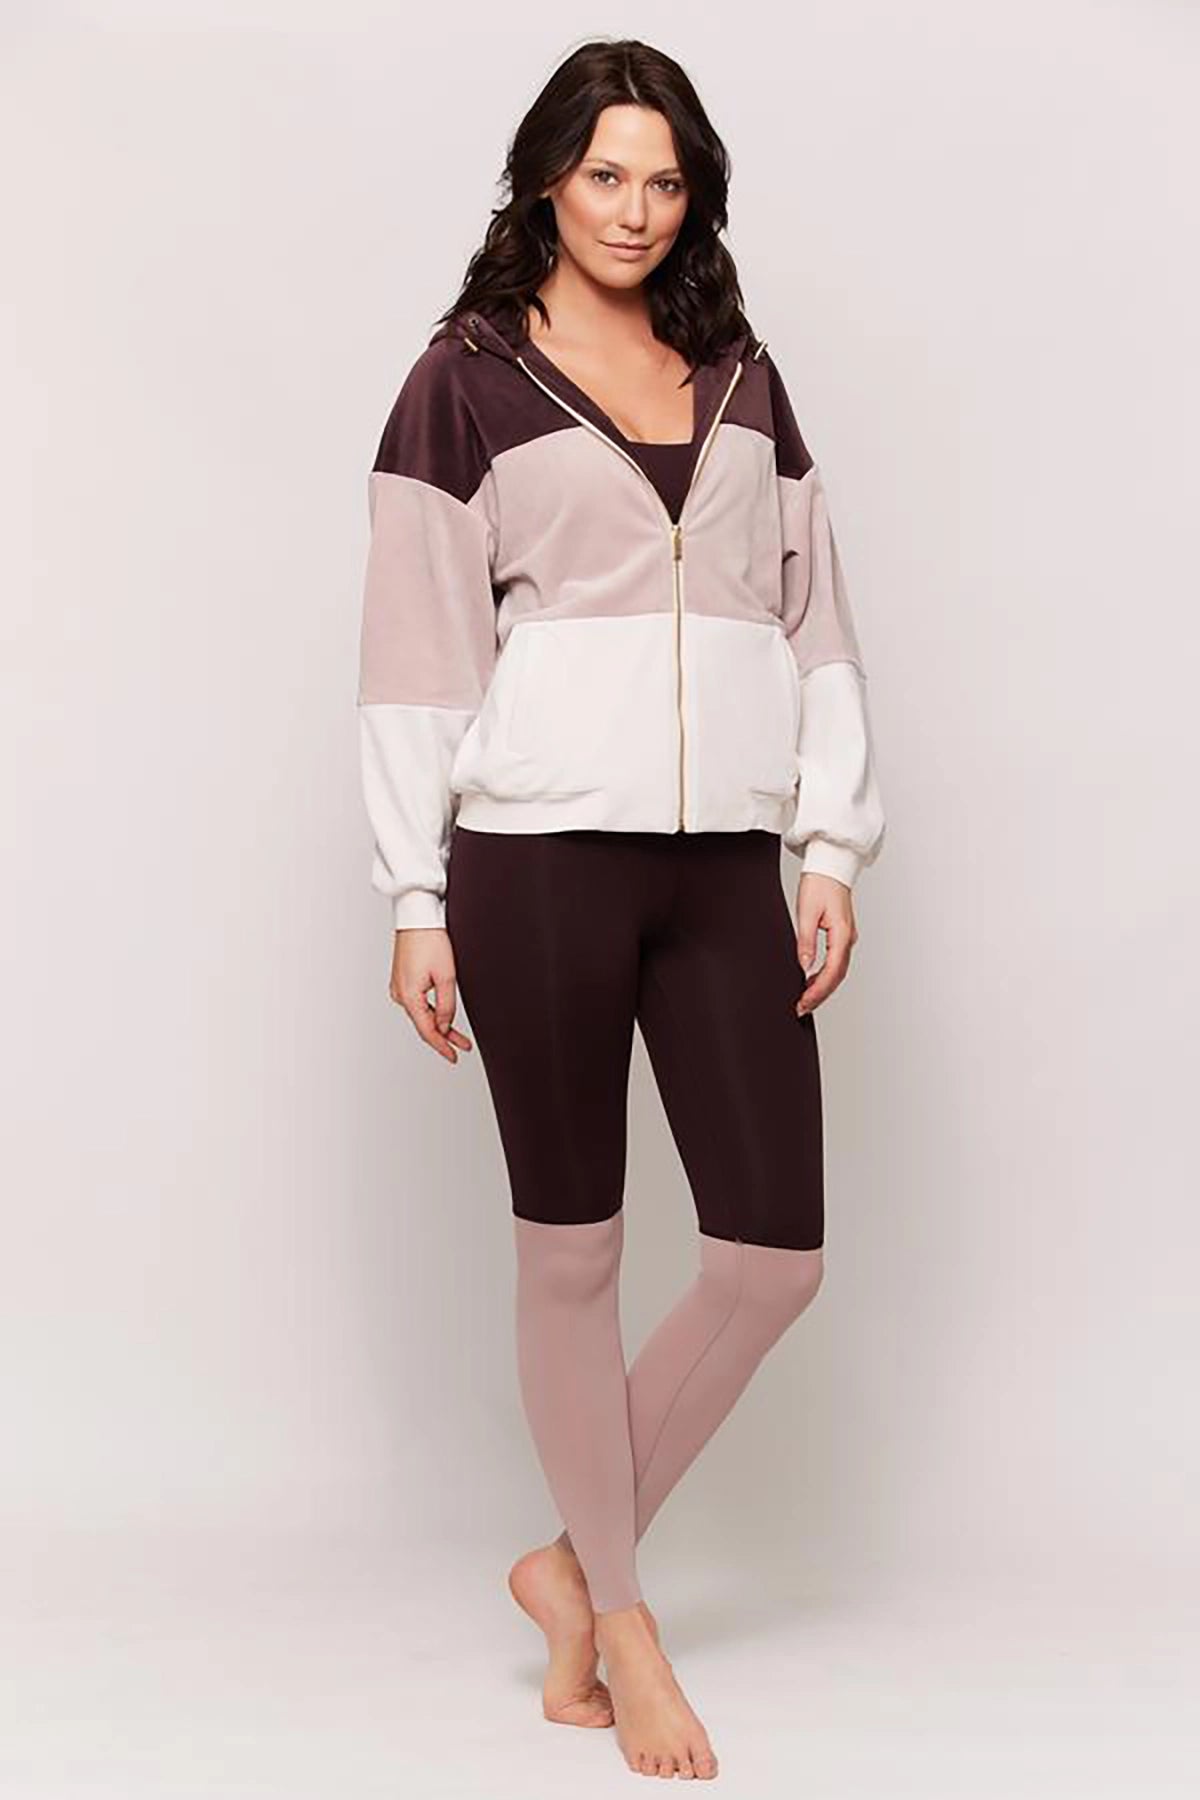 Inspiration full length legging in marine ombre – Aurum Activewear